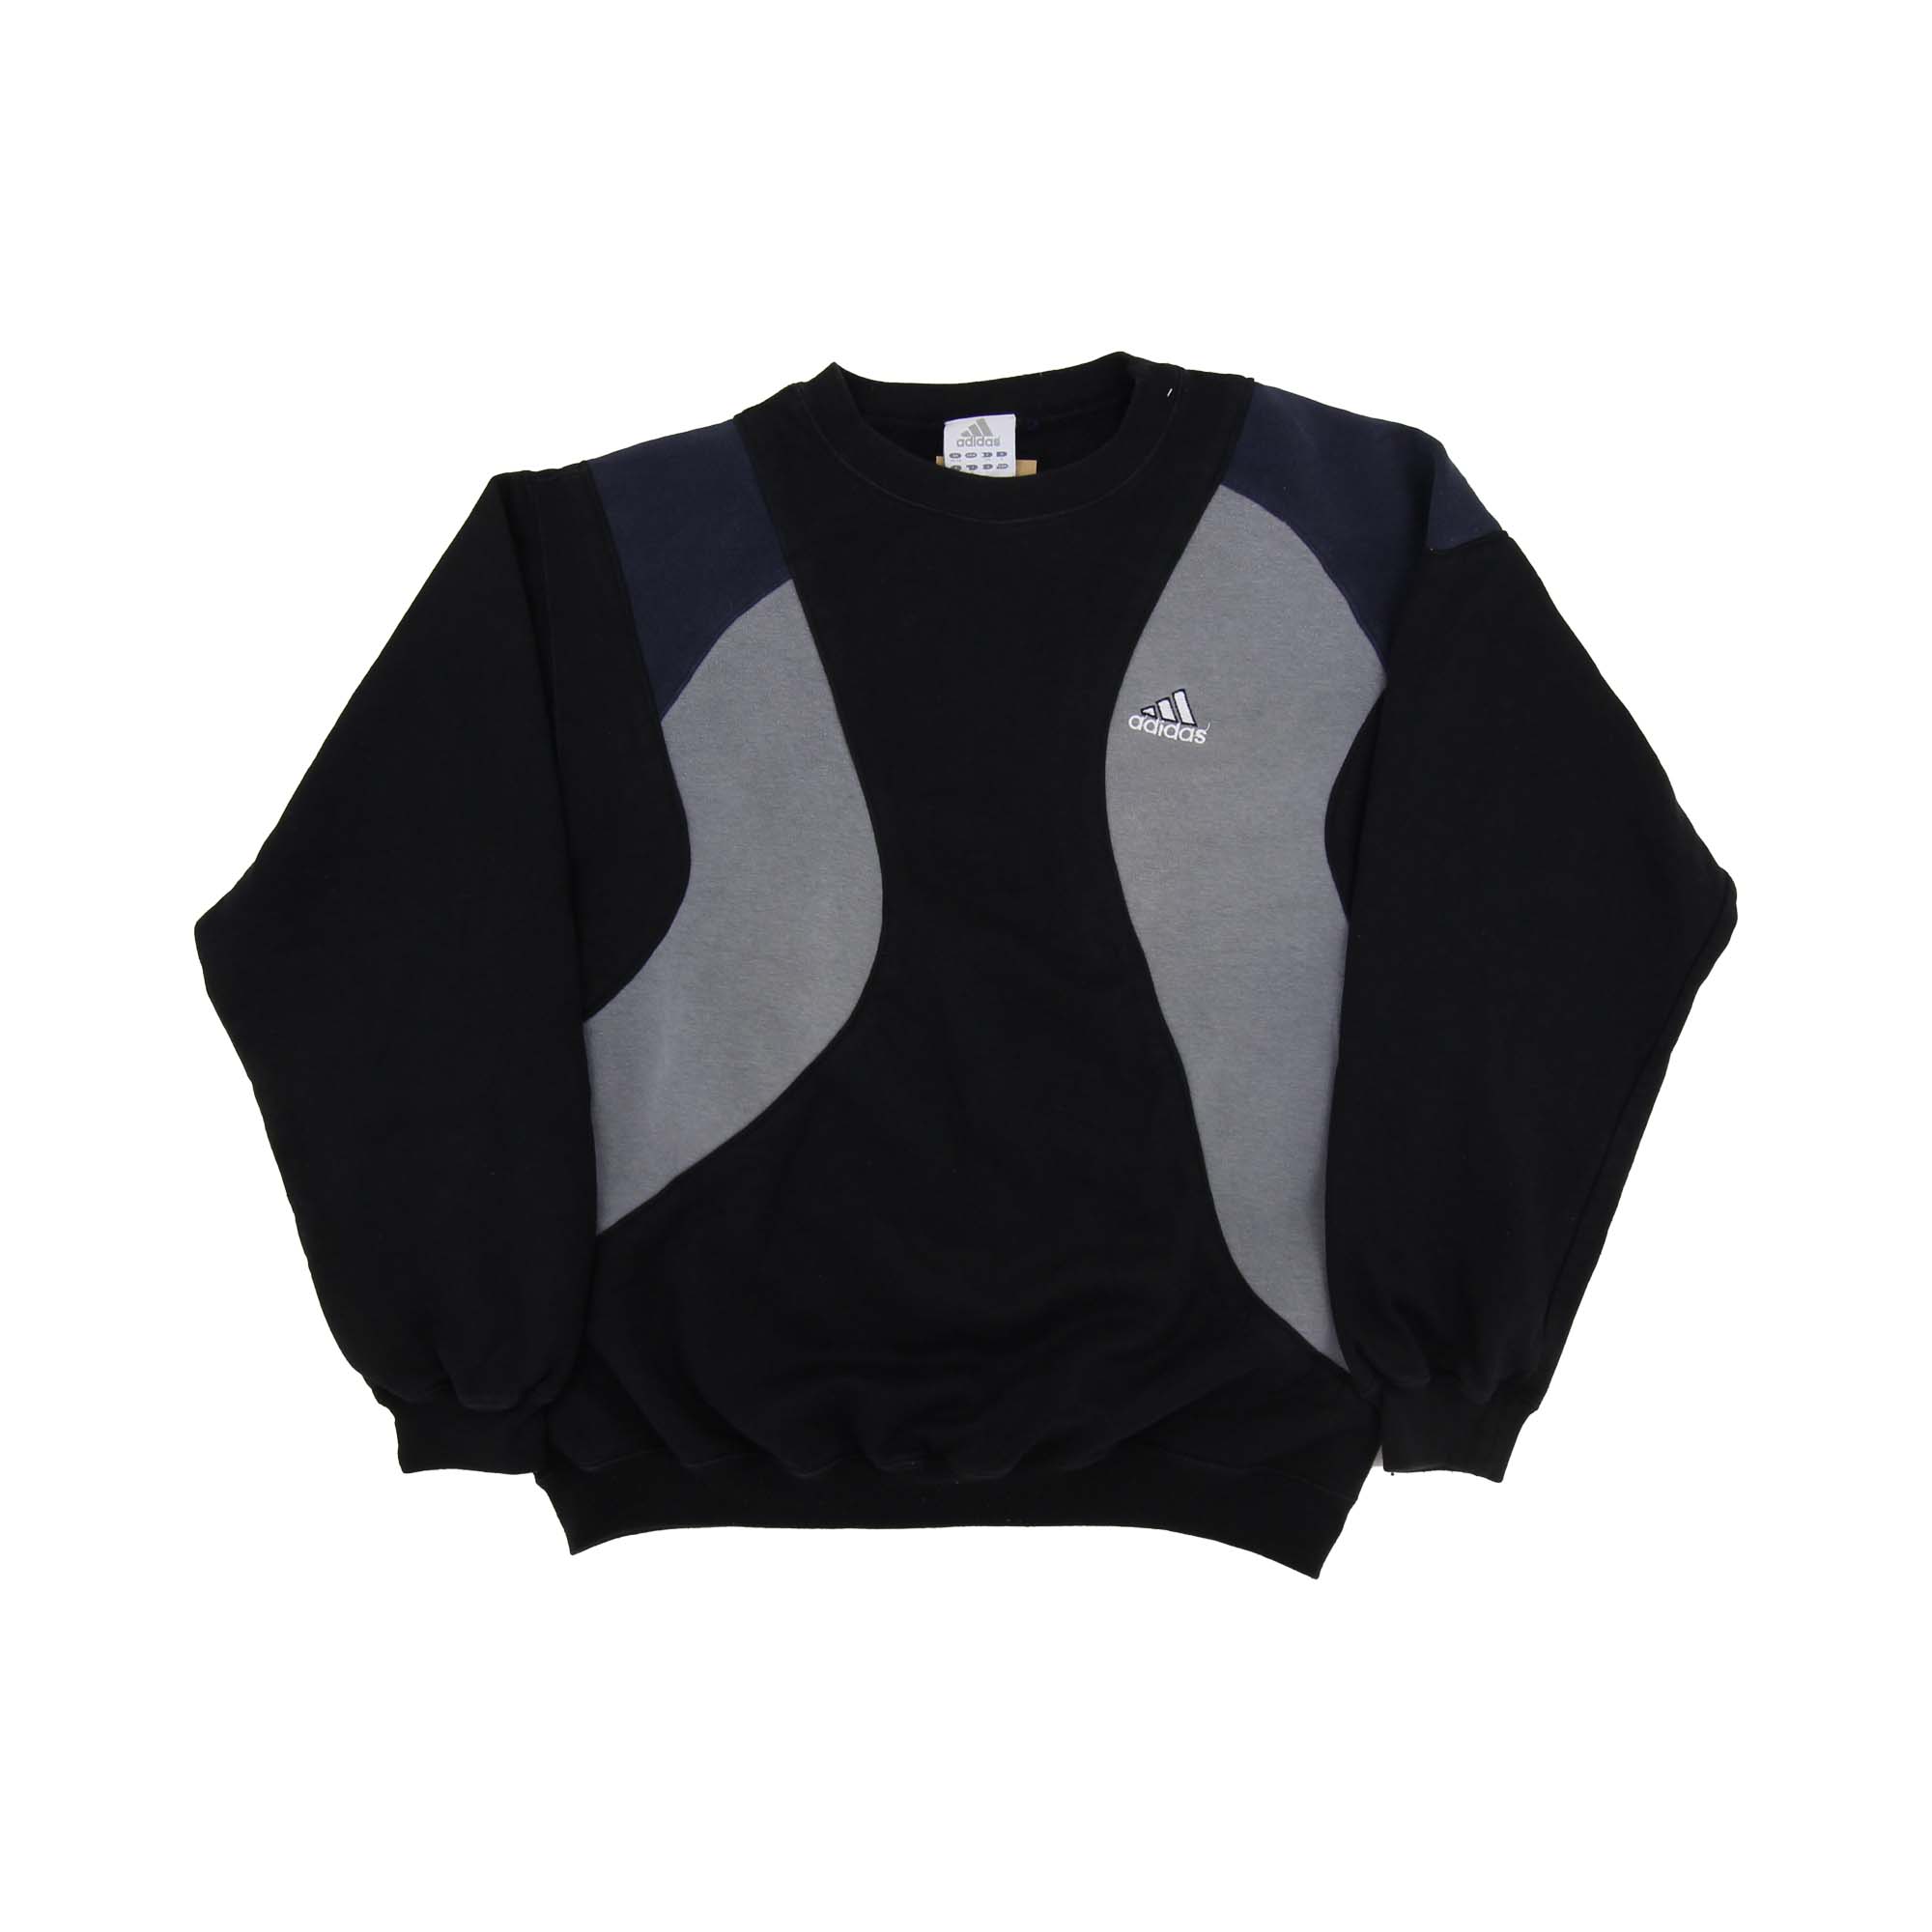 Adidas Rework Sweatshirt - M